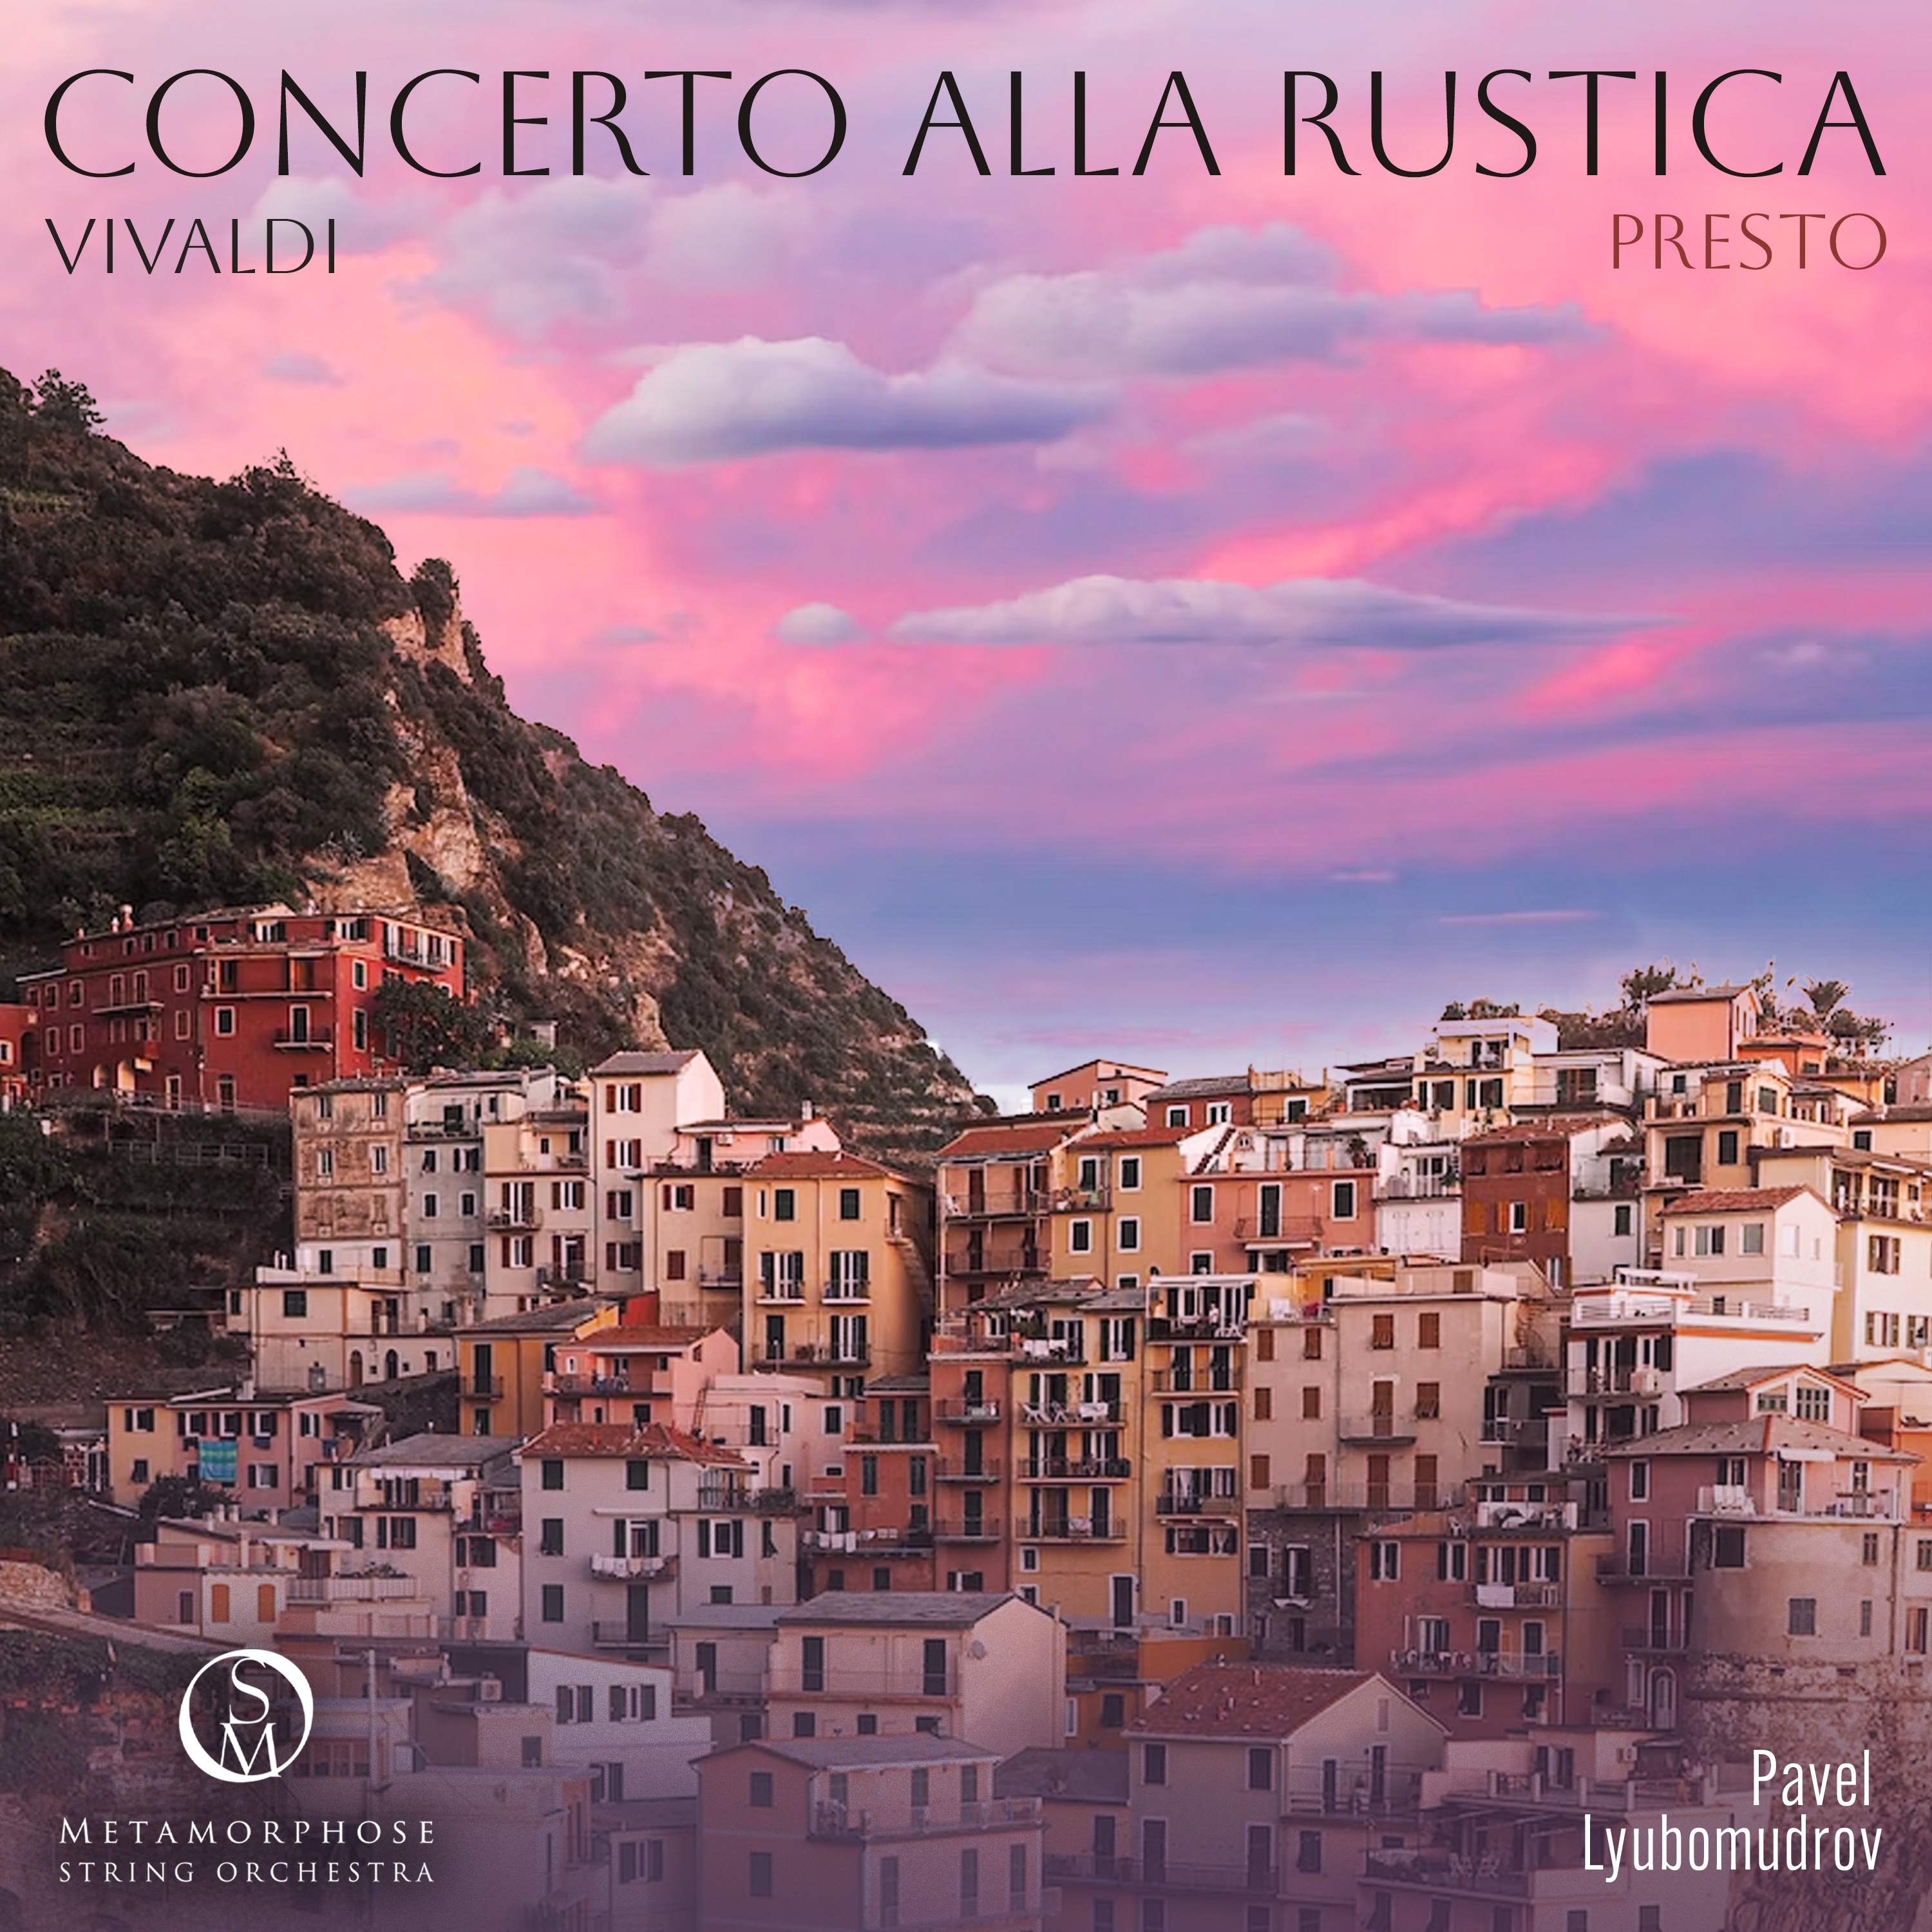 Concerto alla Rustica for Strings in G major: I. Presto